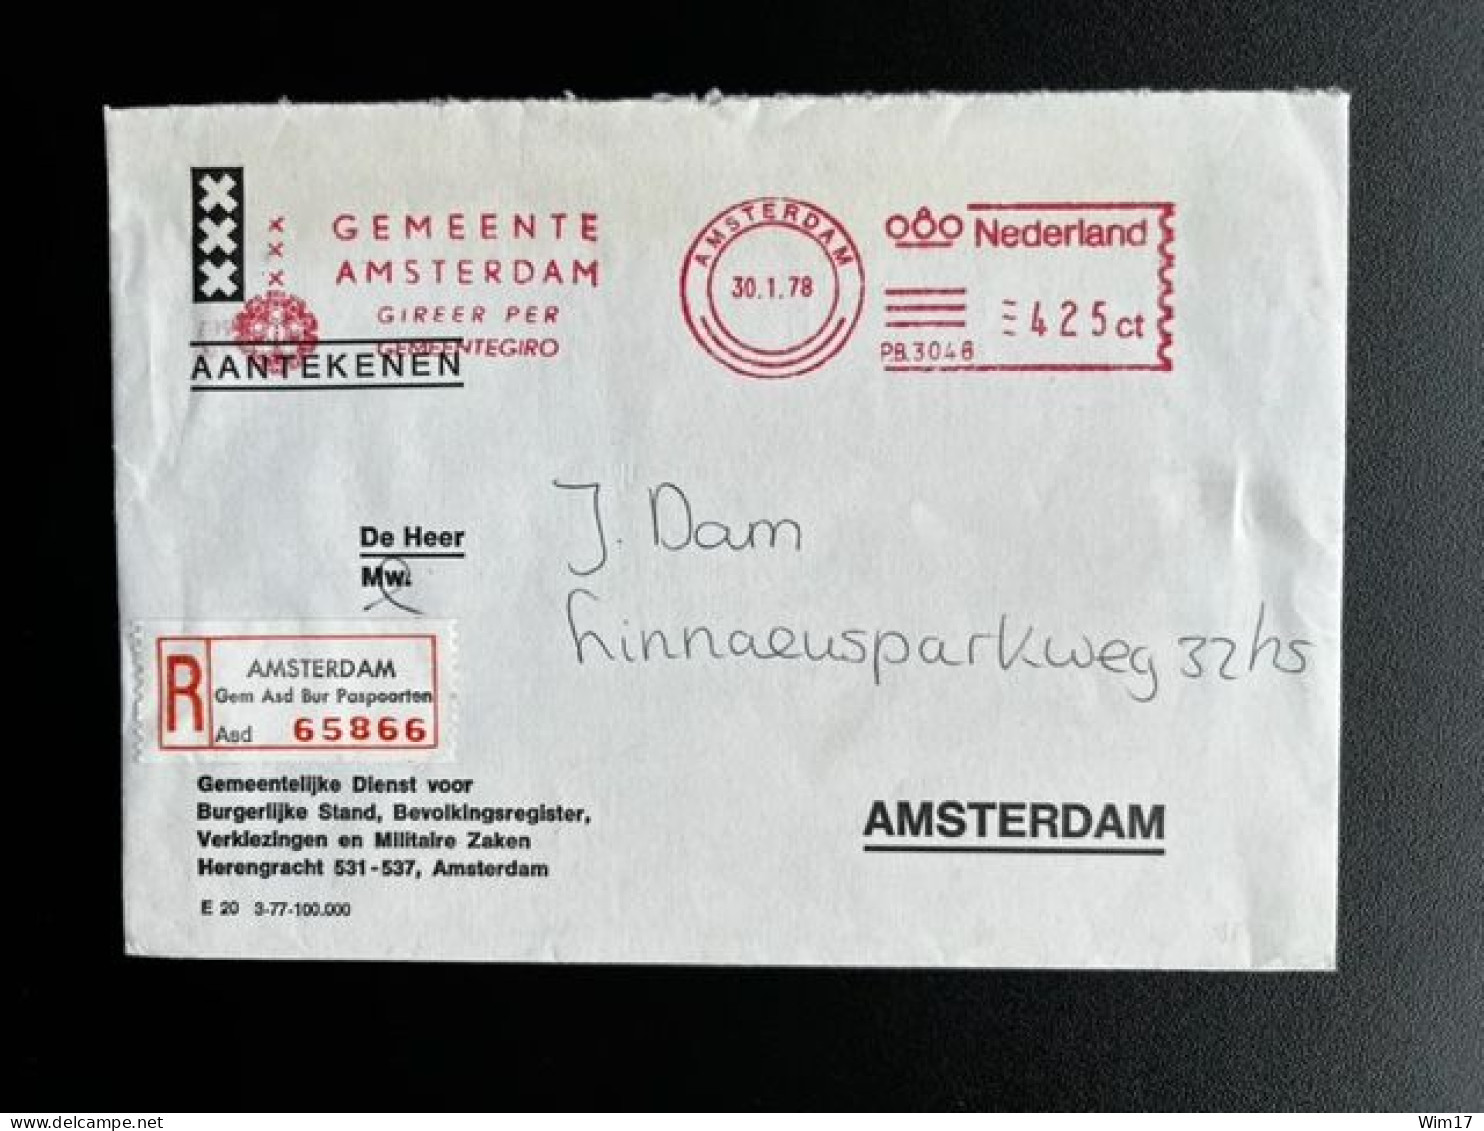 NETHERLANDS 1978 REGISTERED LETTER AMSTERDAM GEM ASD BUR PASPOORTEN 30-01-1978 NEDERLAND AANGETEKEND - Covers & Documents